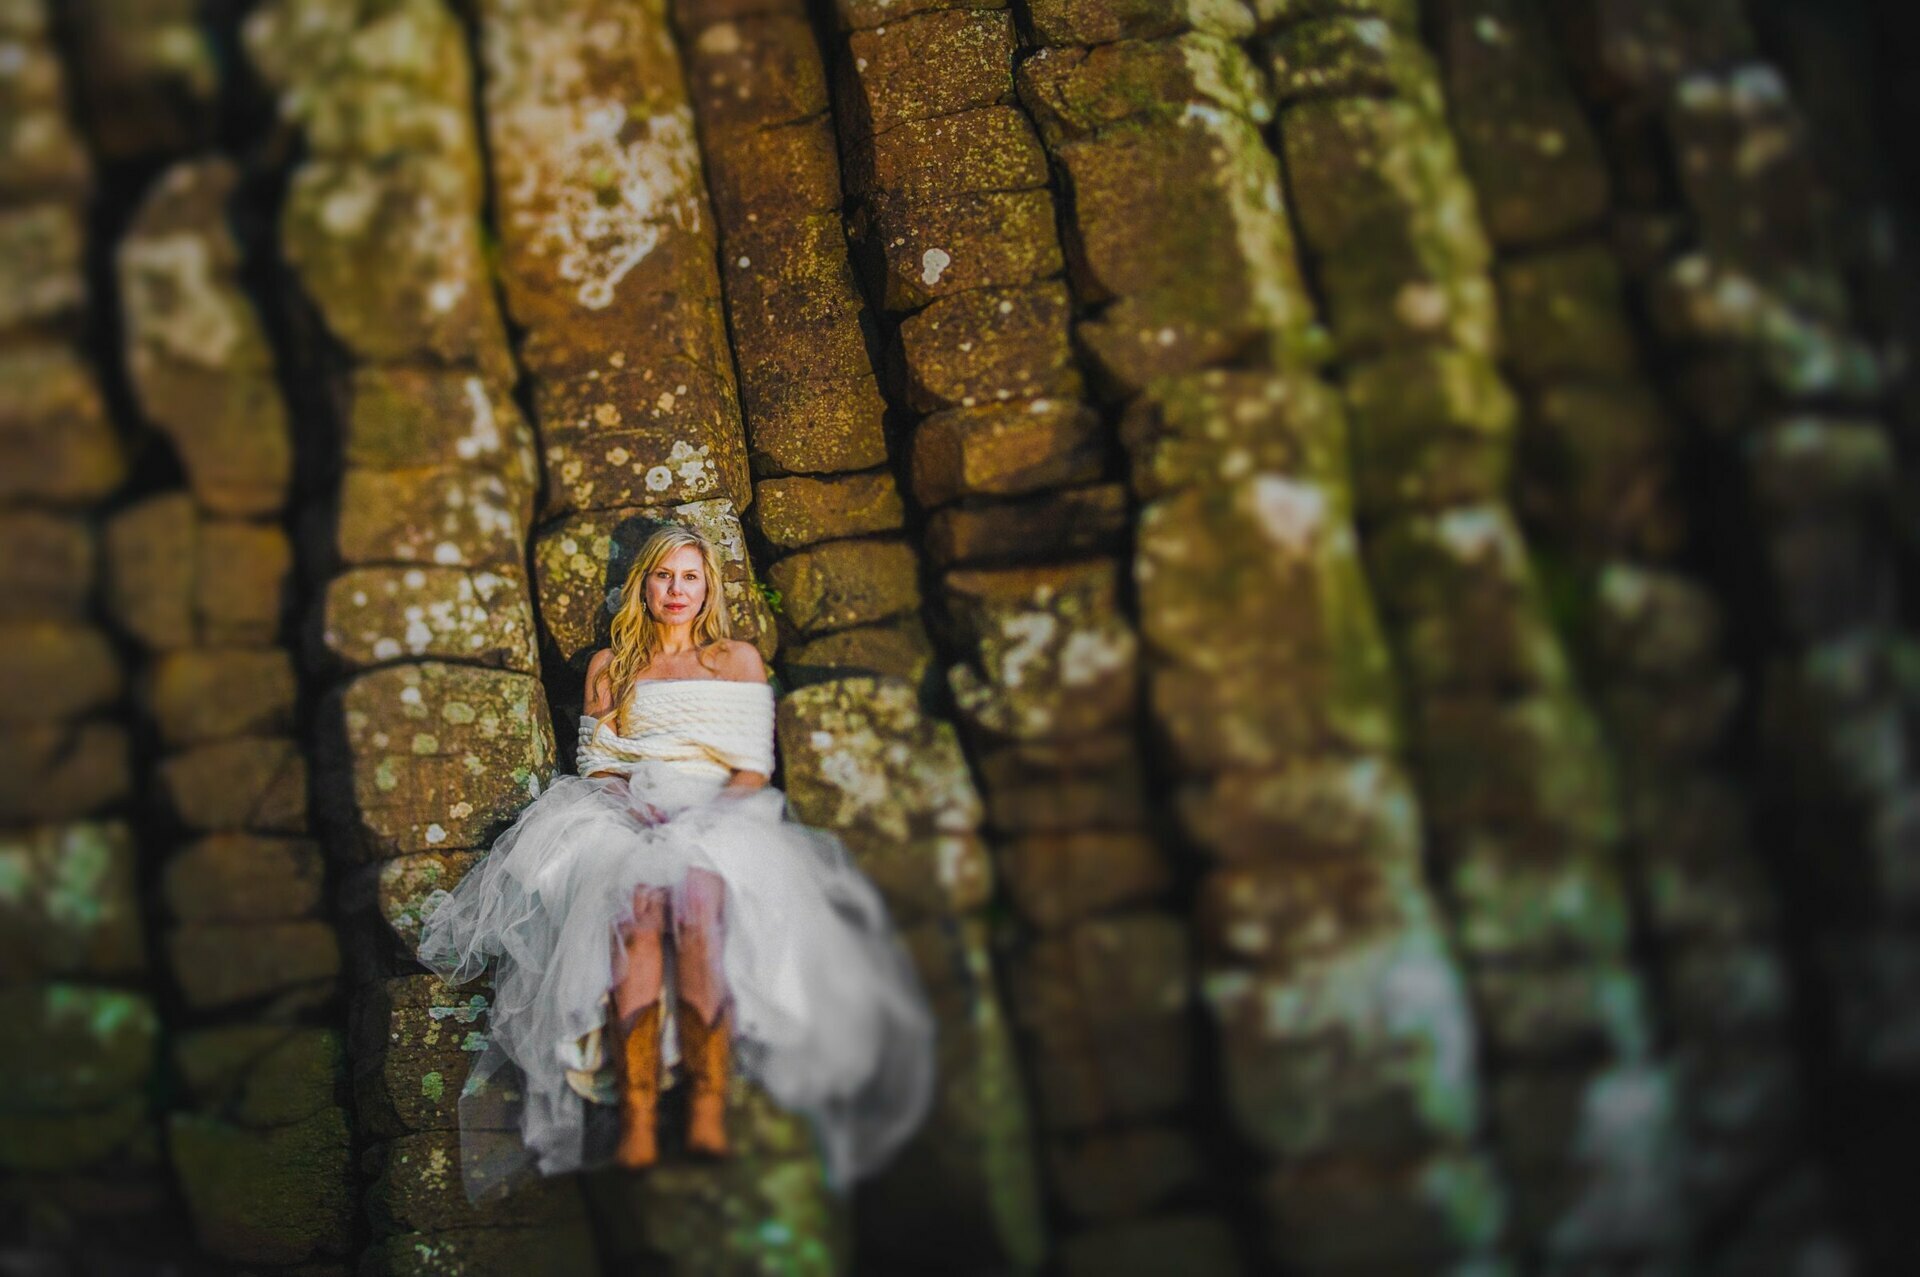 Finding the best wedding photographer in Dublin Ireland 2023